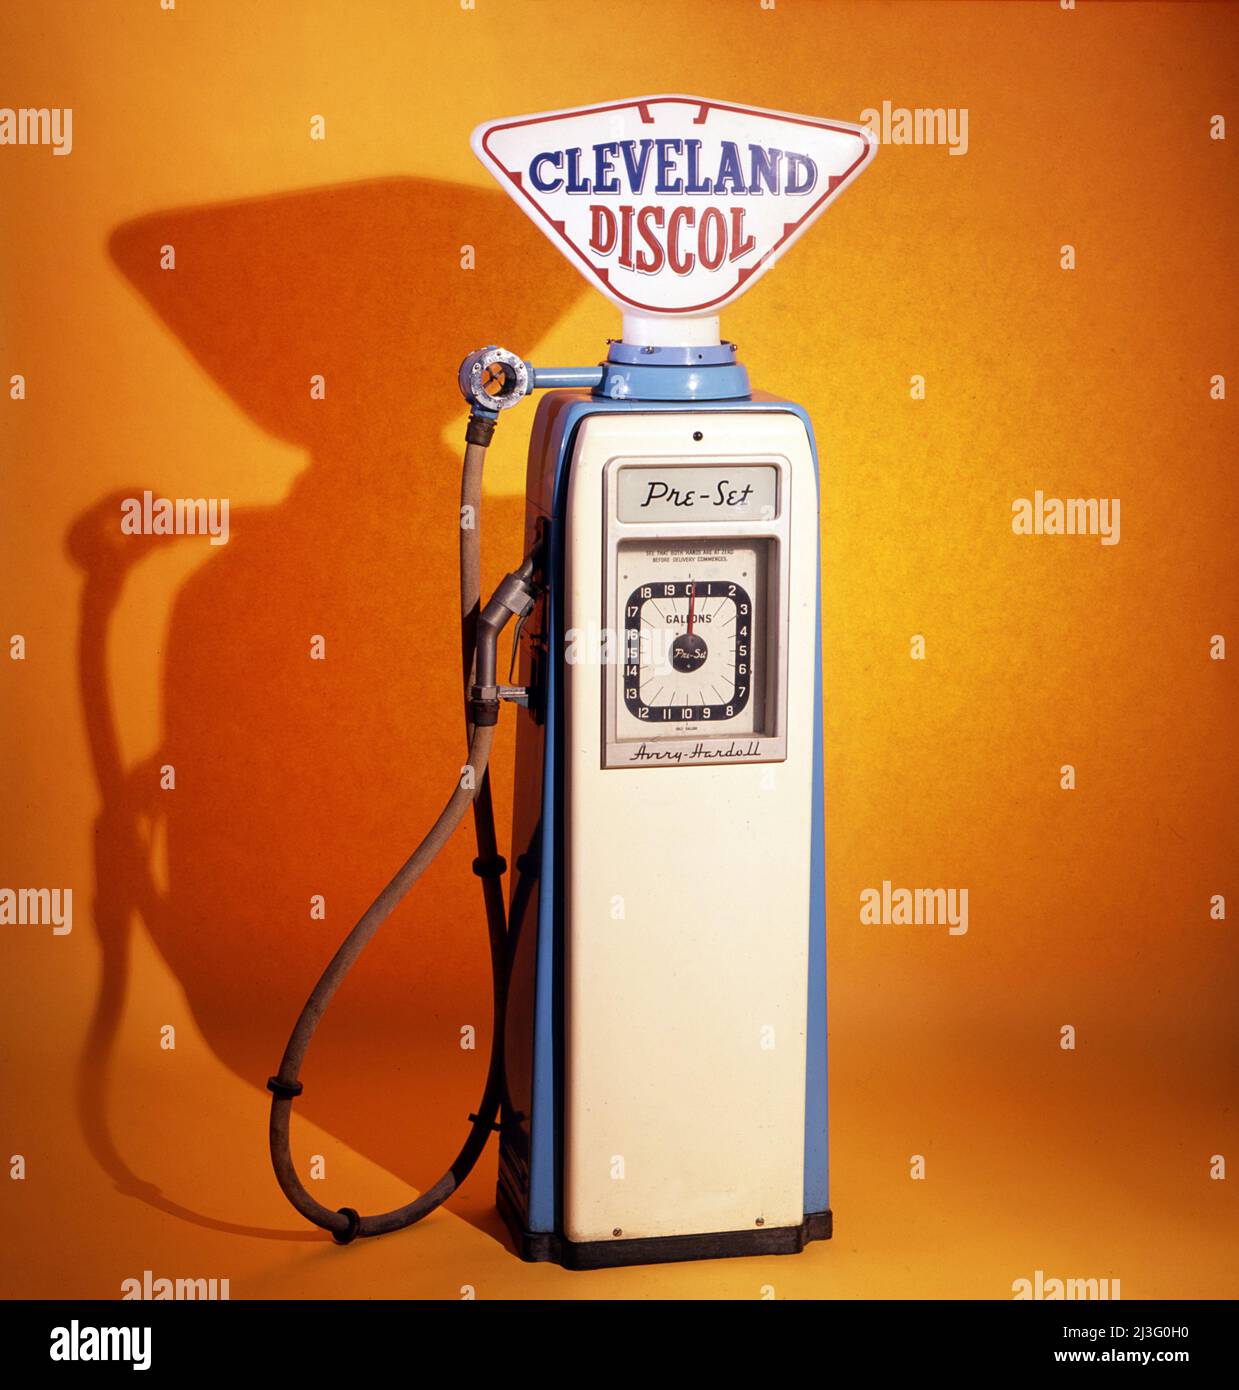 Avery Hardoll Cleveland Discol petrol pump 1950s Stock Photo